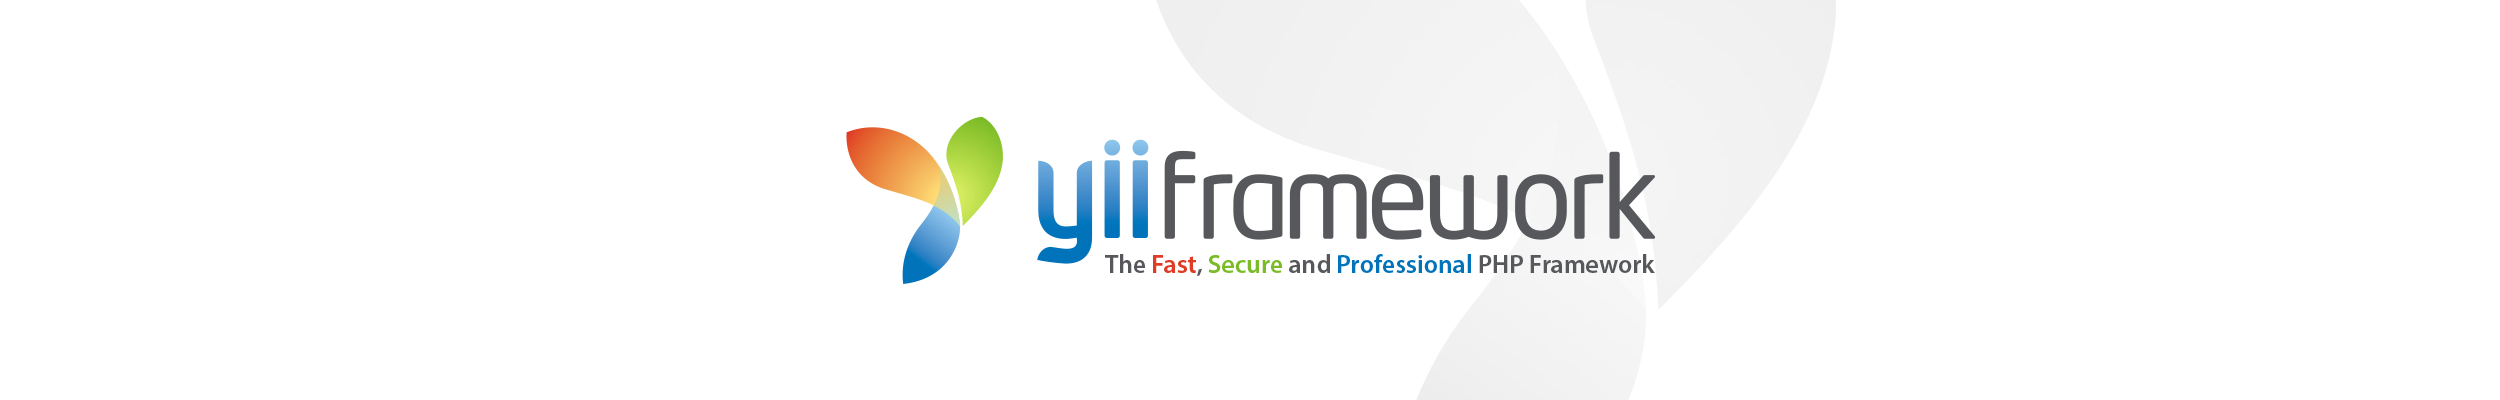 Web-Applikationen mit dem Yii-Framework